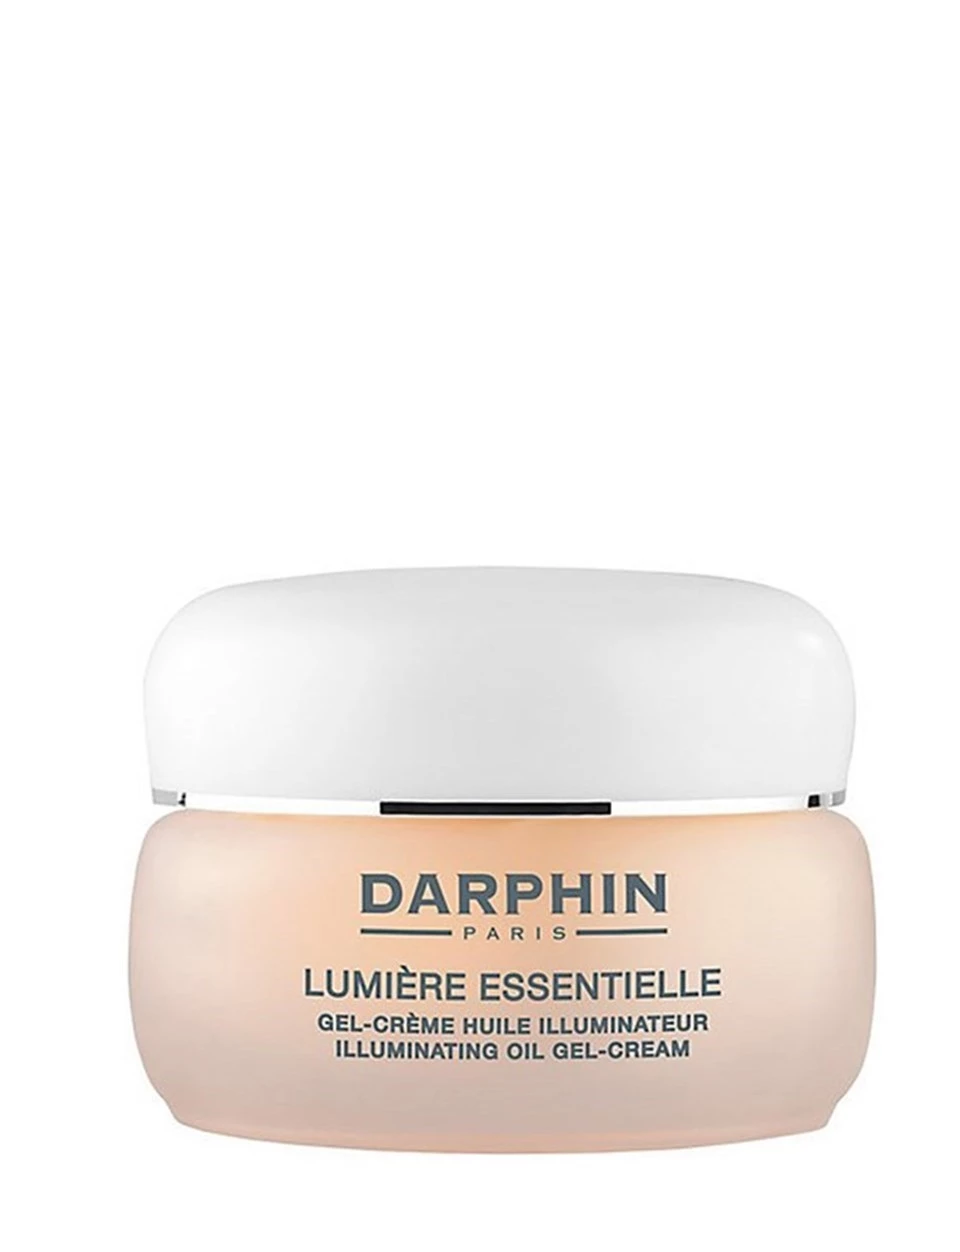 Darphin Lumiere Essentielle Illuminating Oil Gel Cream 50ml